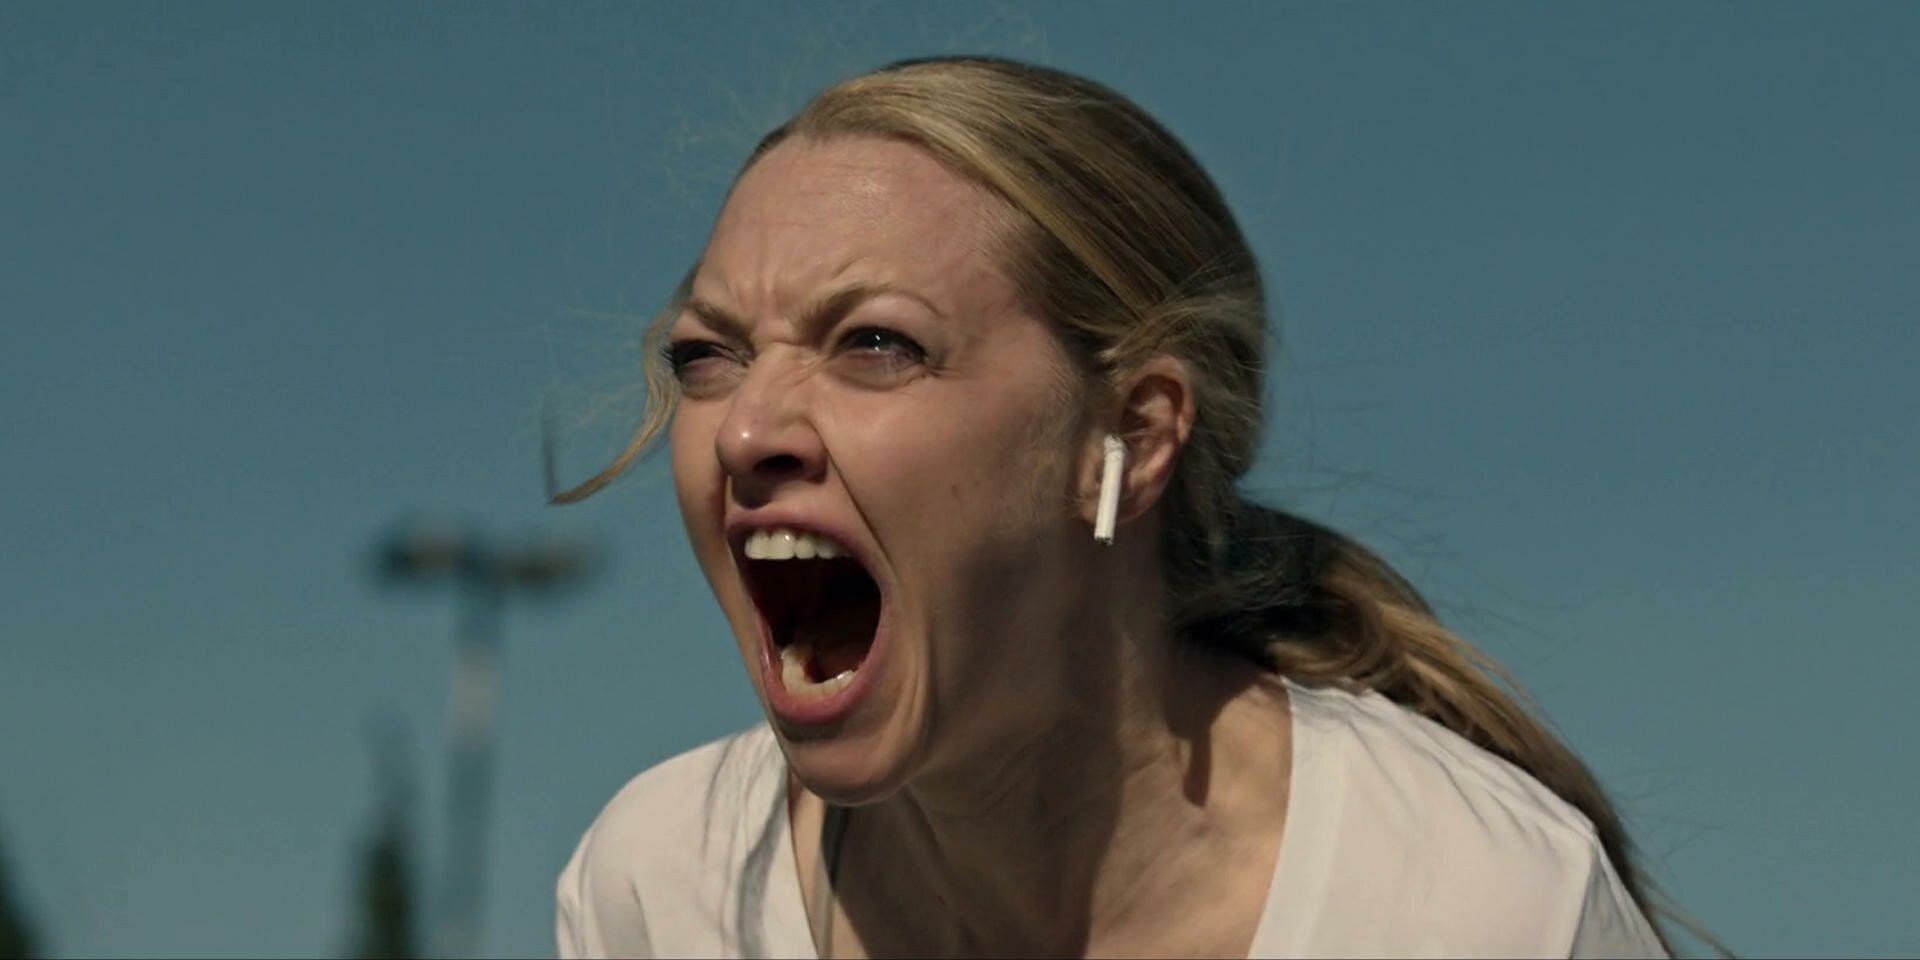 Amanda Seyfried as Elizabeth Holmes screaming in The Dropout